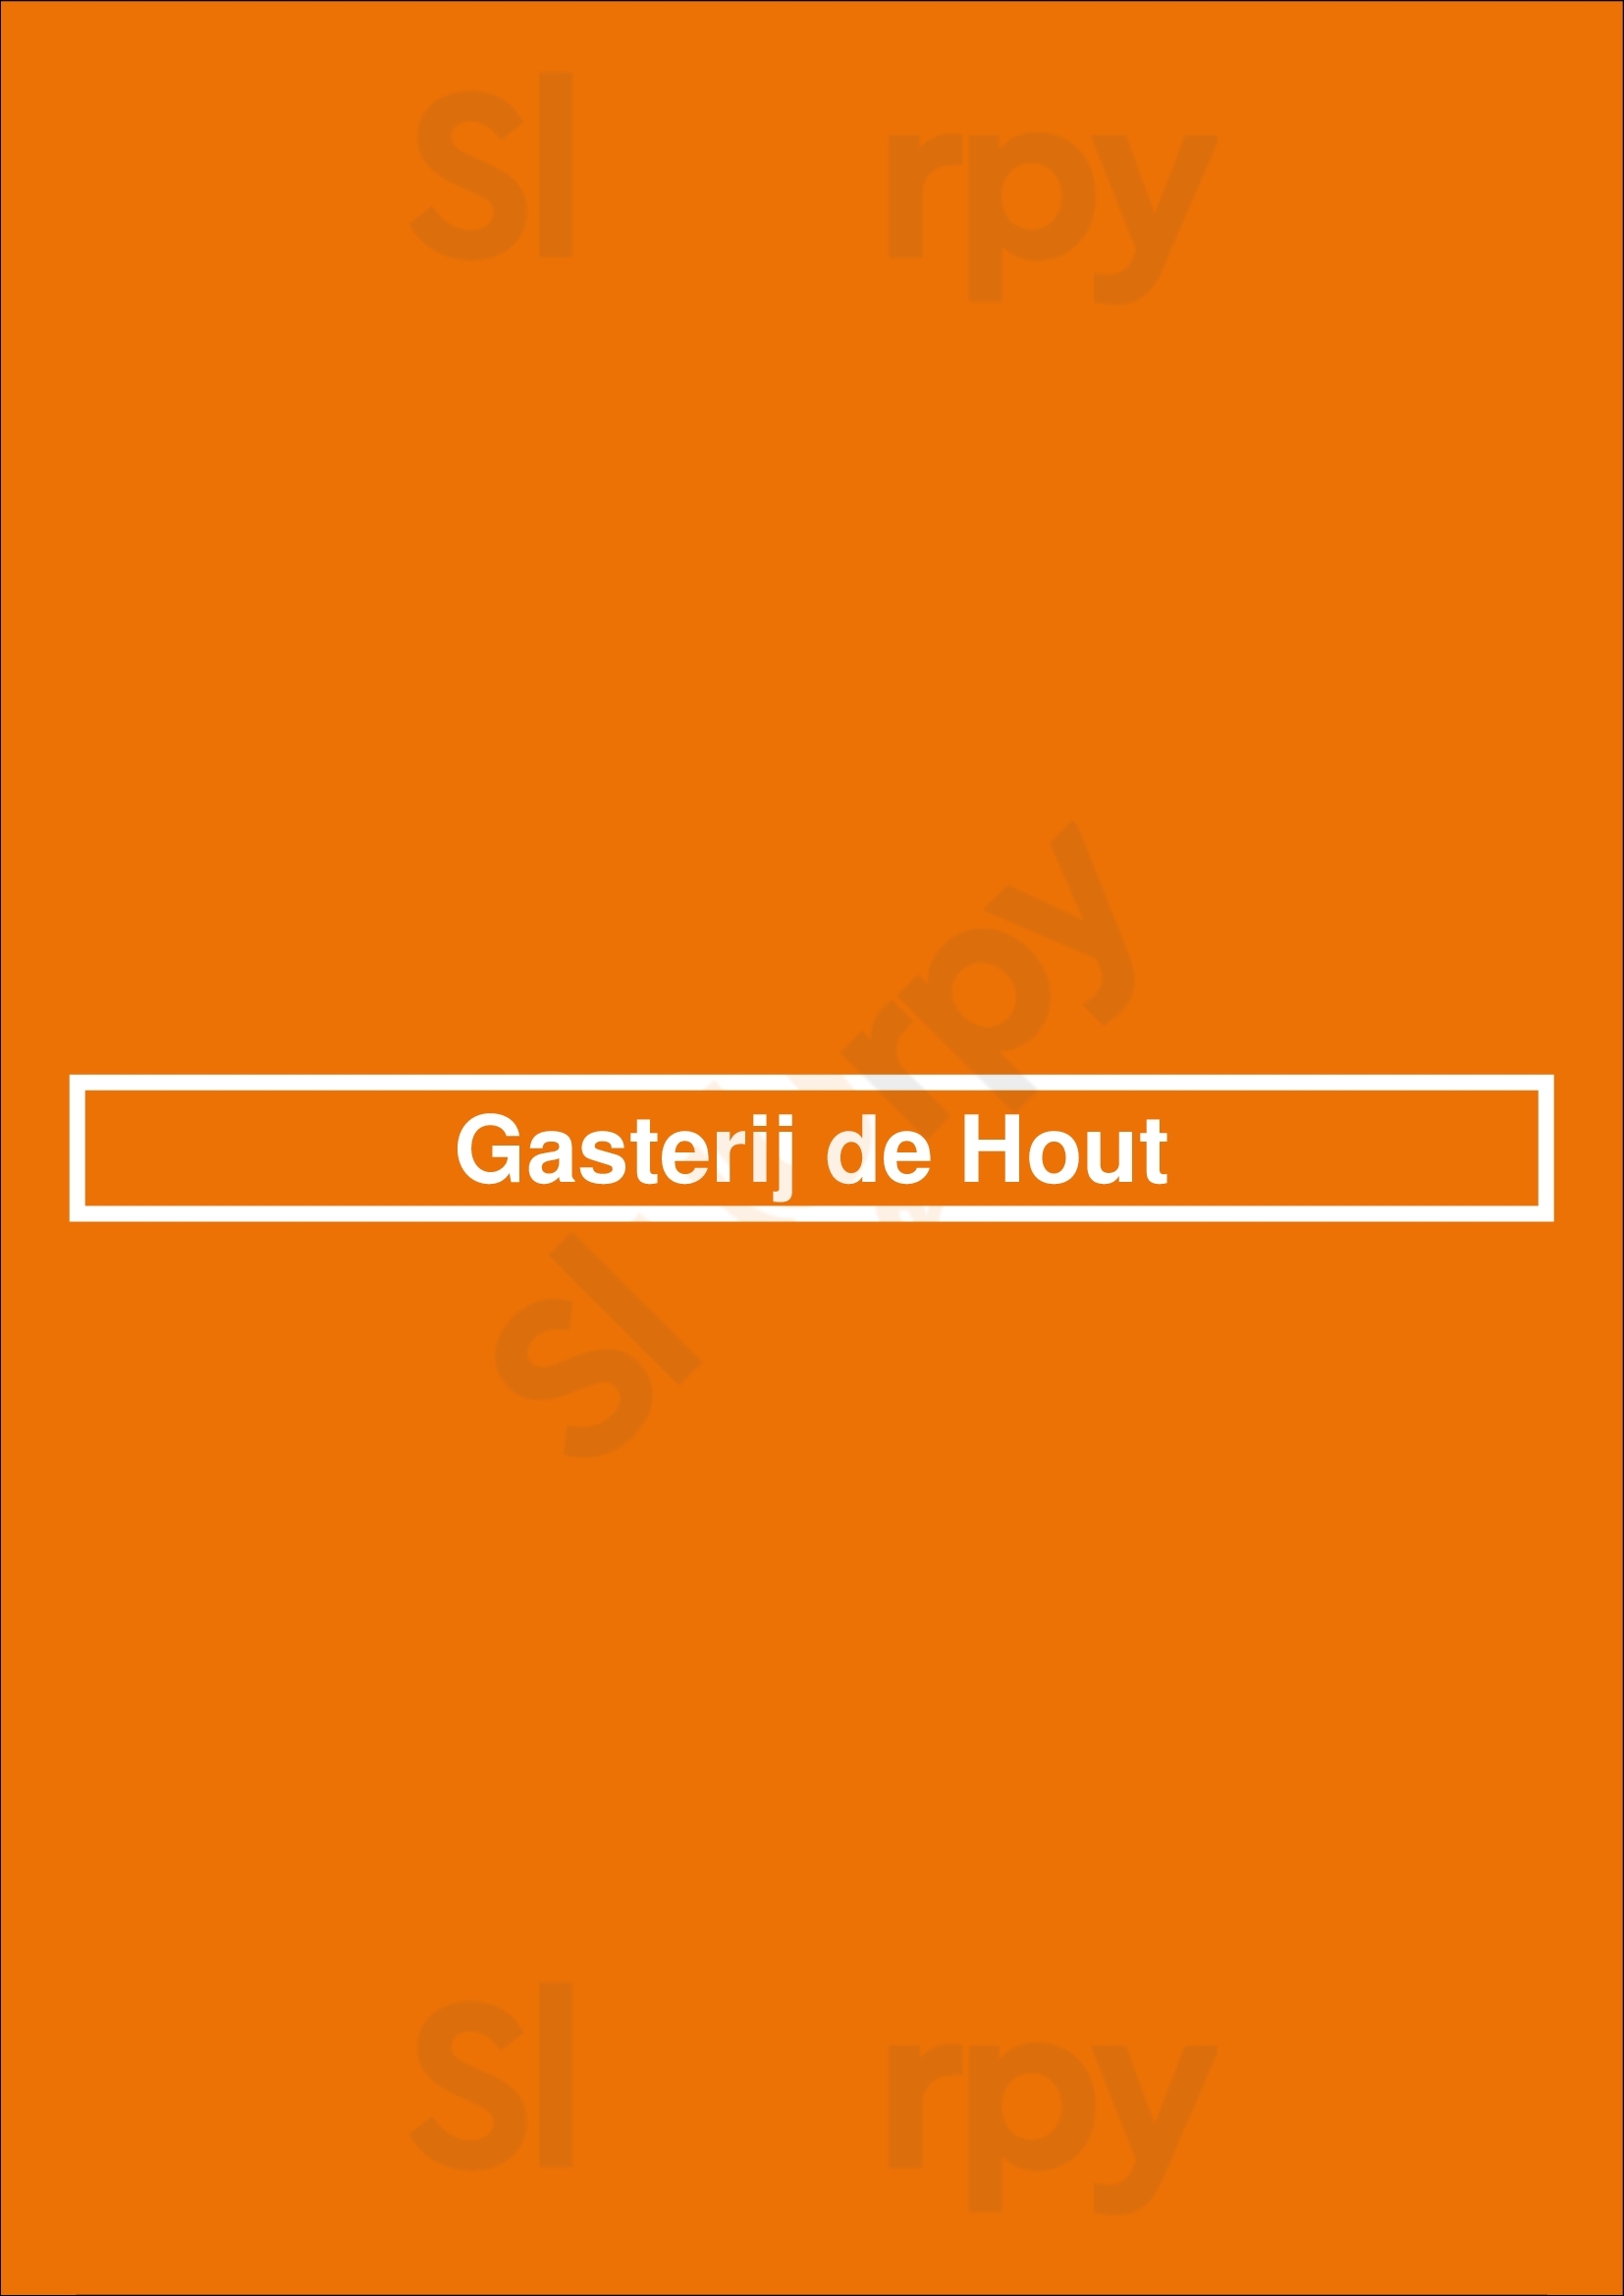 Gasterij De Hout IJmuiden Menu - 1